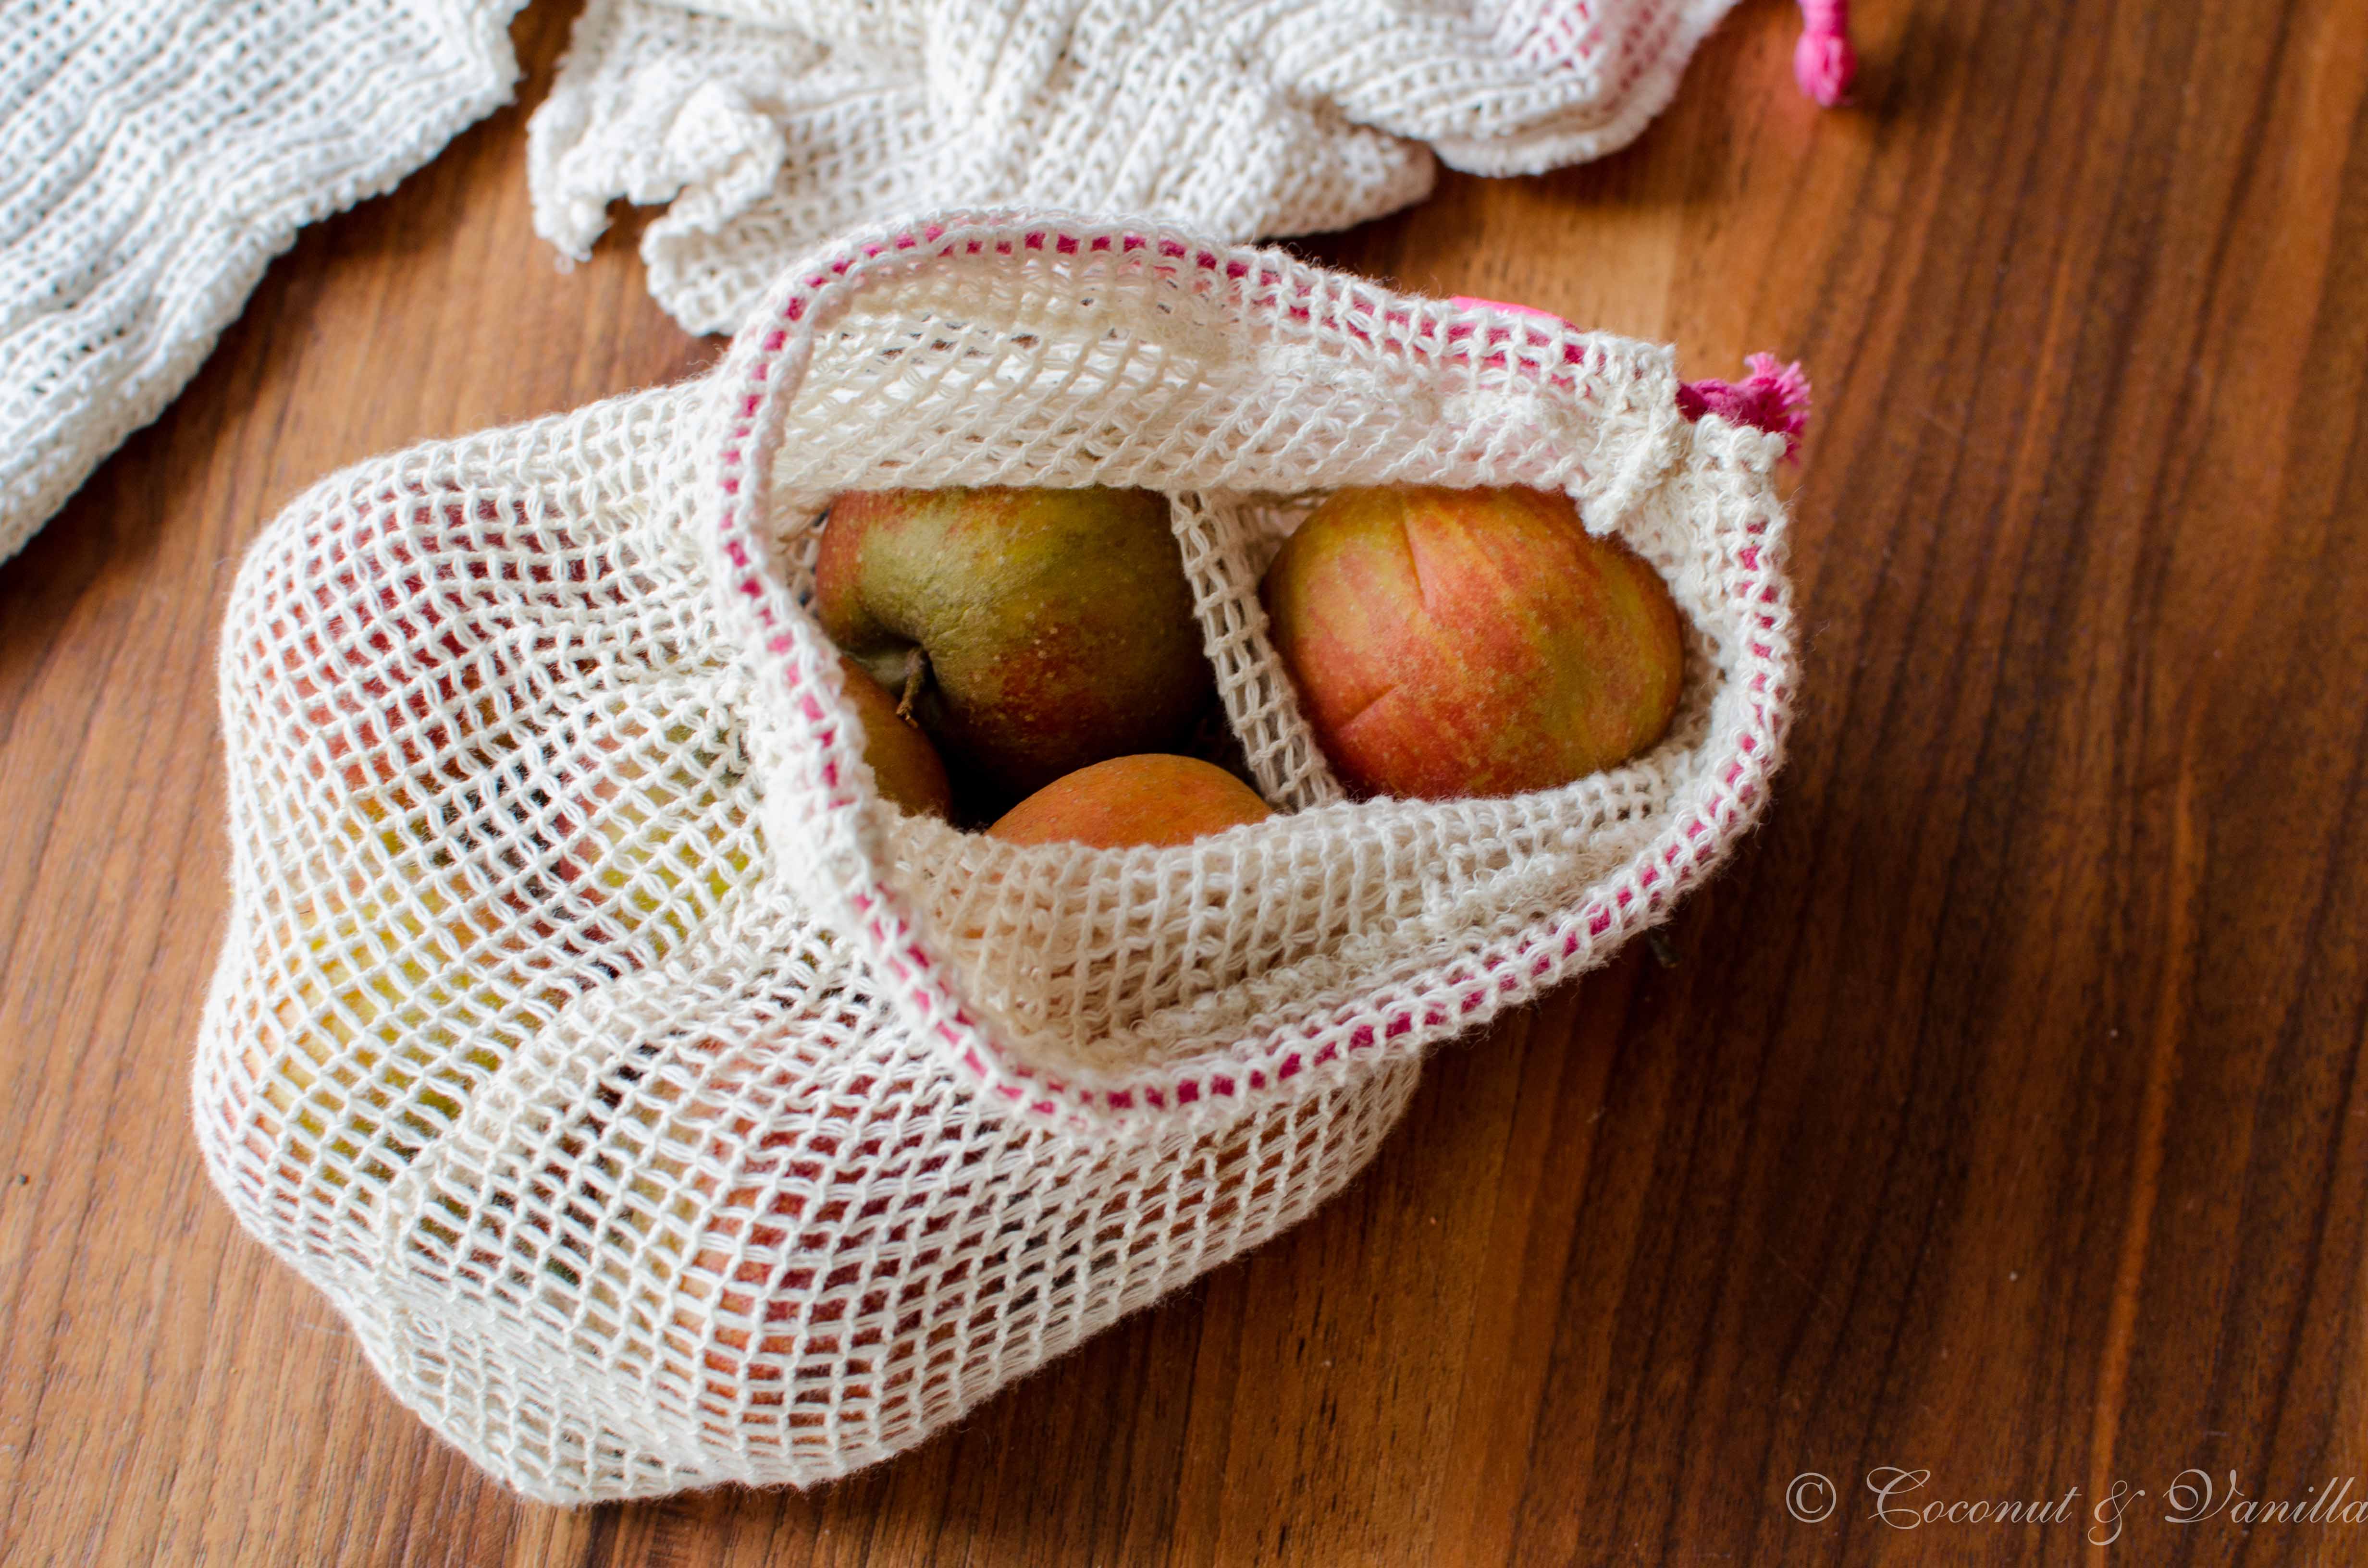 Greenderella Baumwollsäckchen mit Äpfeln